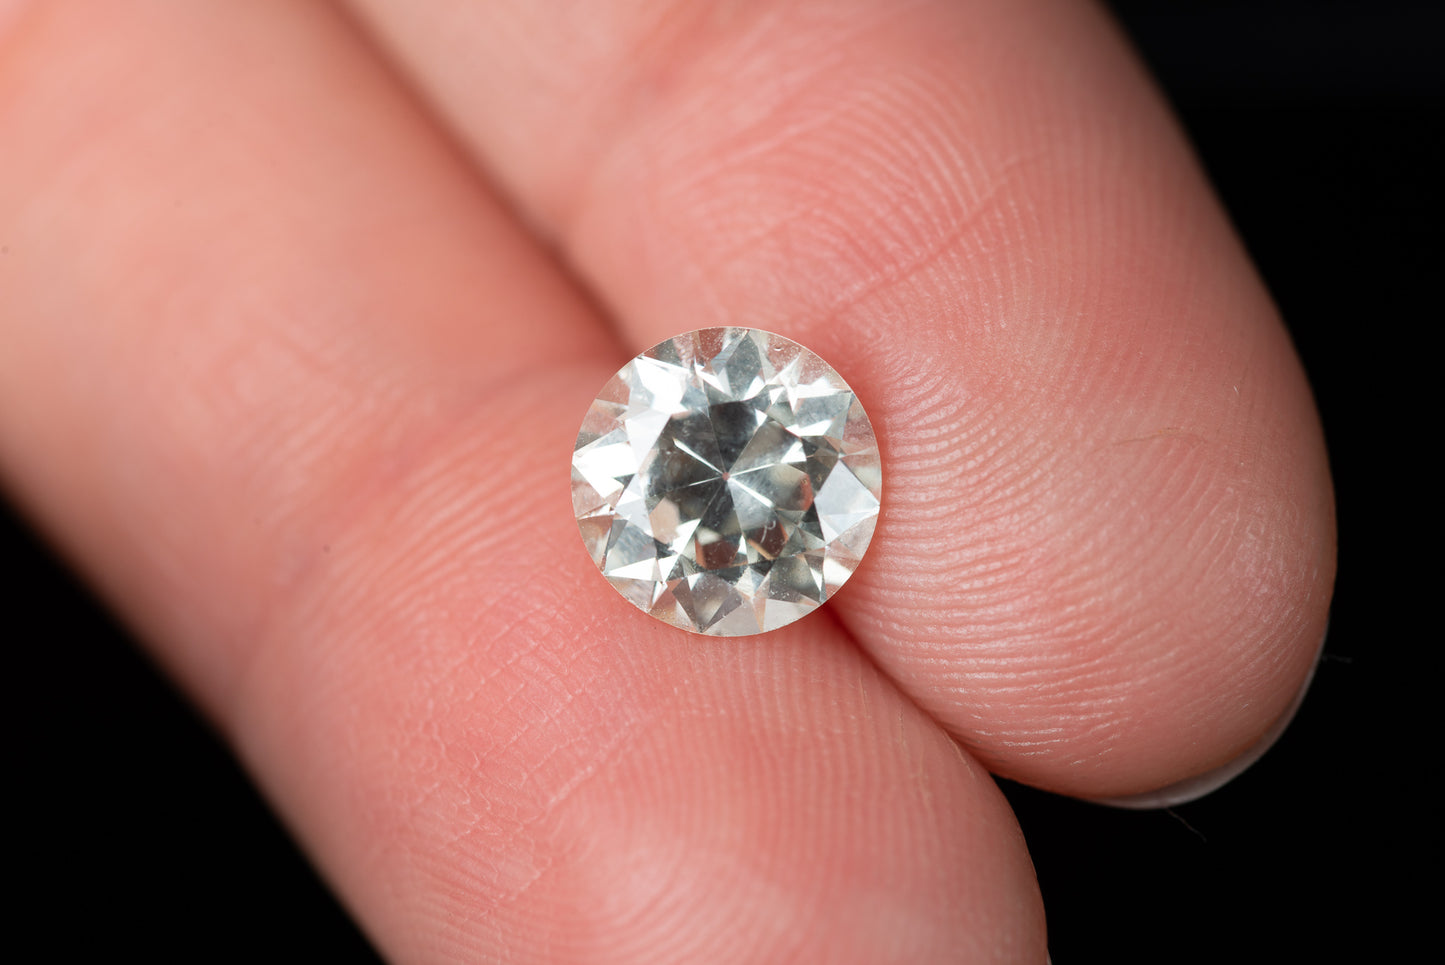 2.03 carat loose diamond